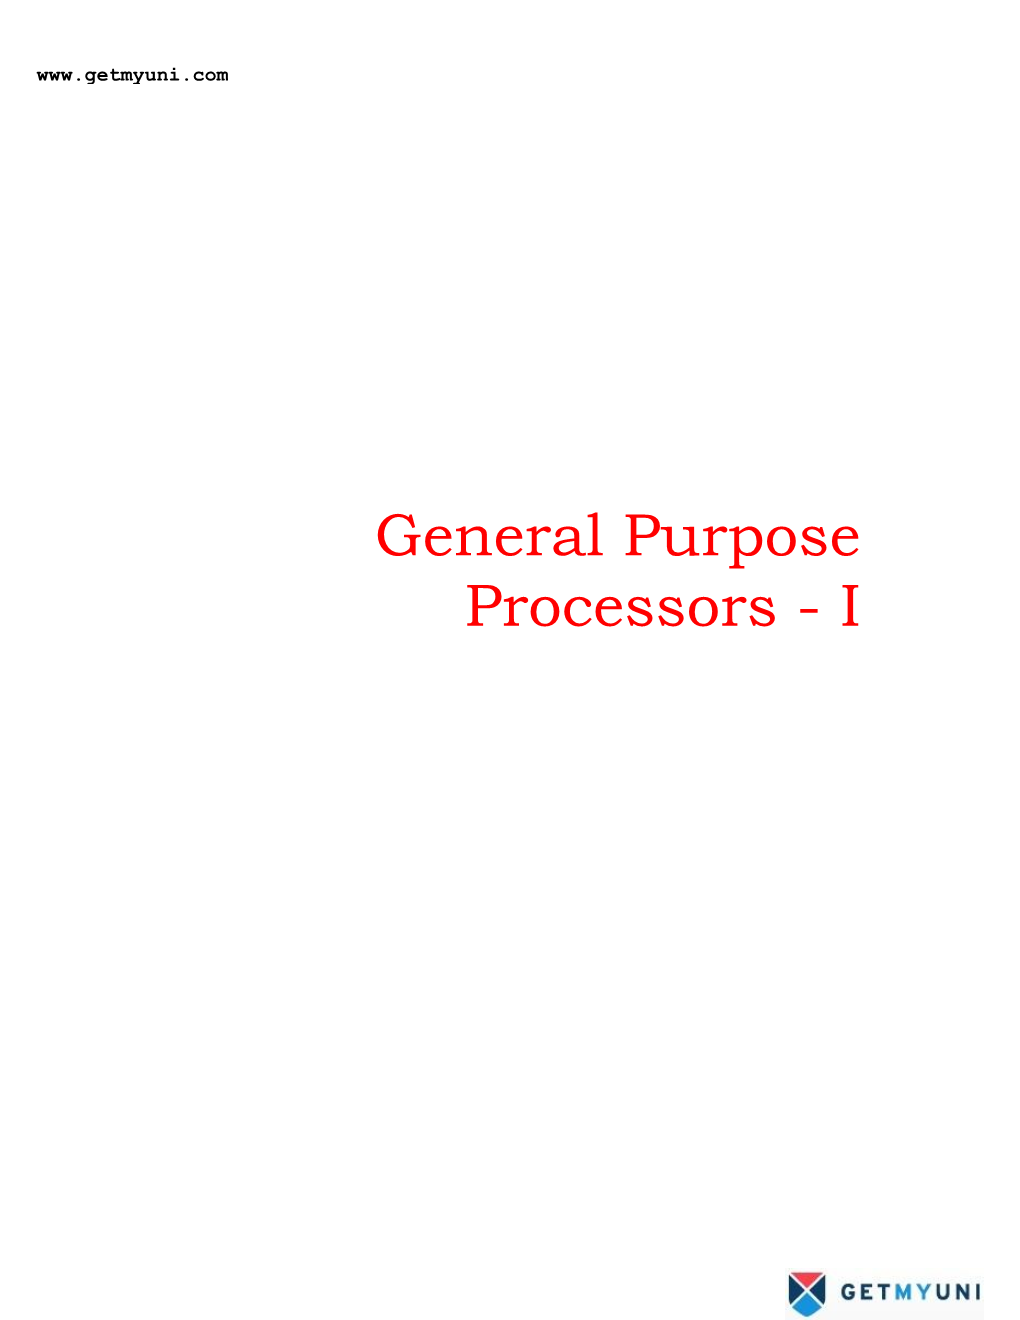 General Purpose Processors - I